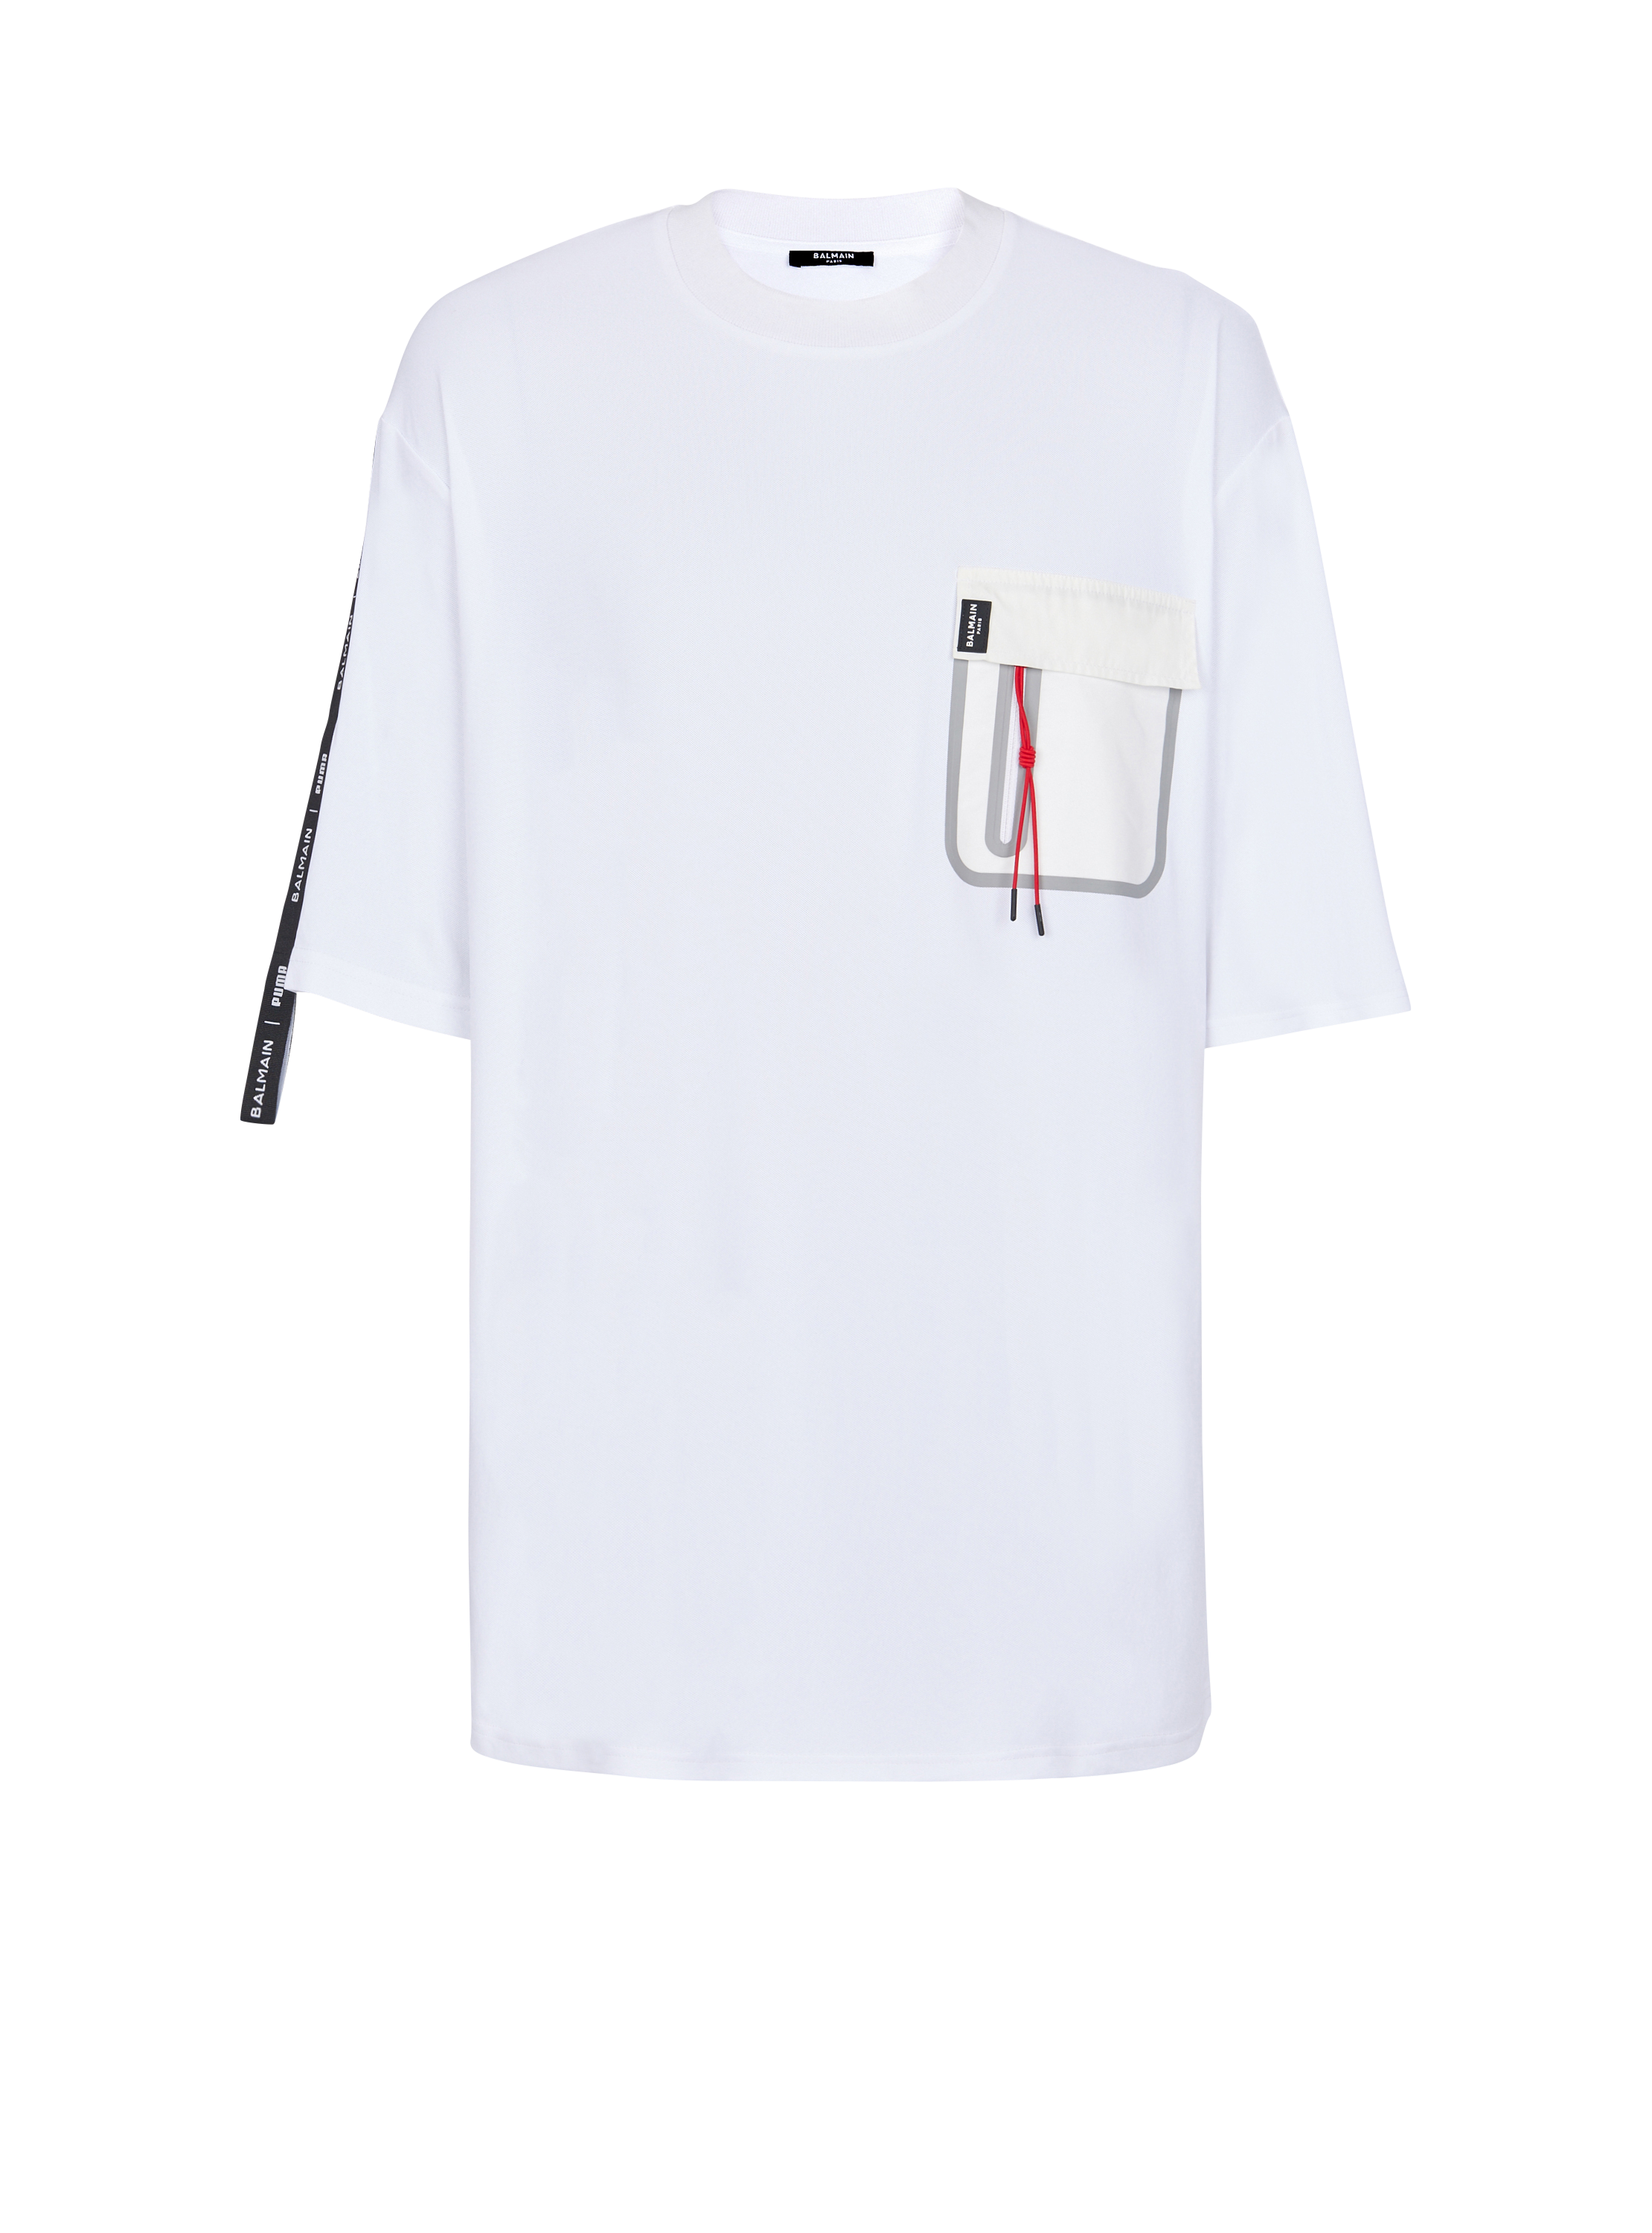 Balmain x Puma – Oversize-T-Shirt mit Tasche, WeiB, hi-res